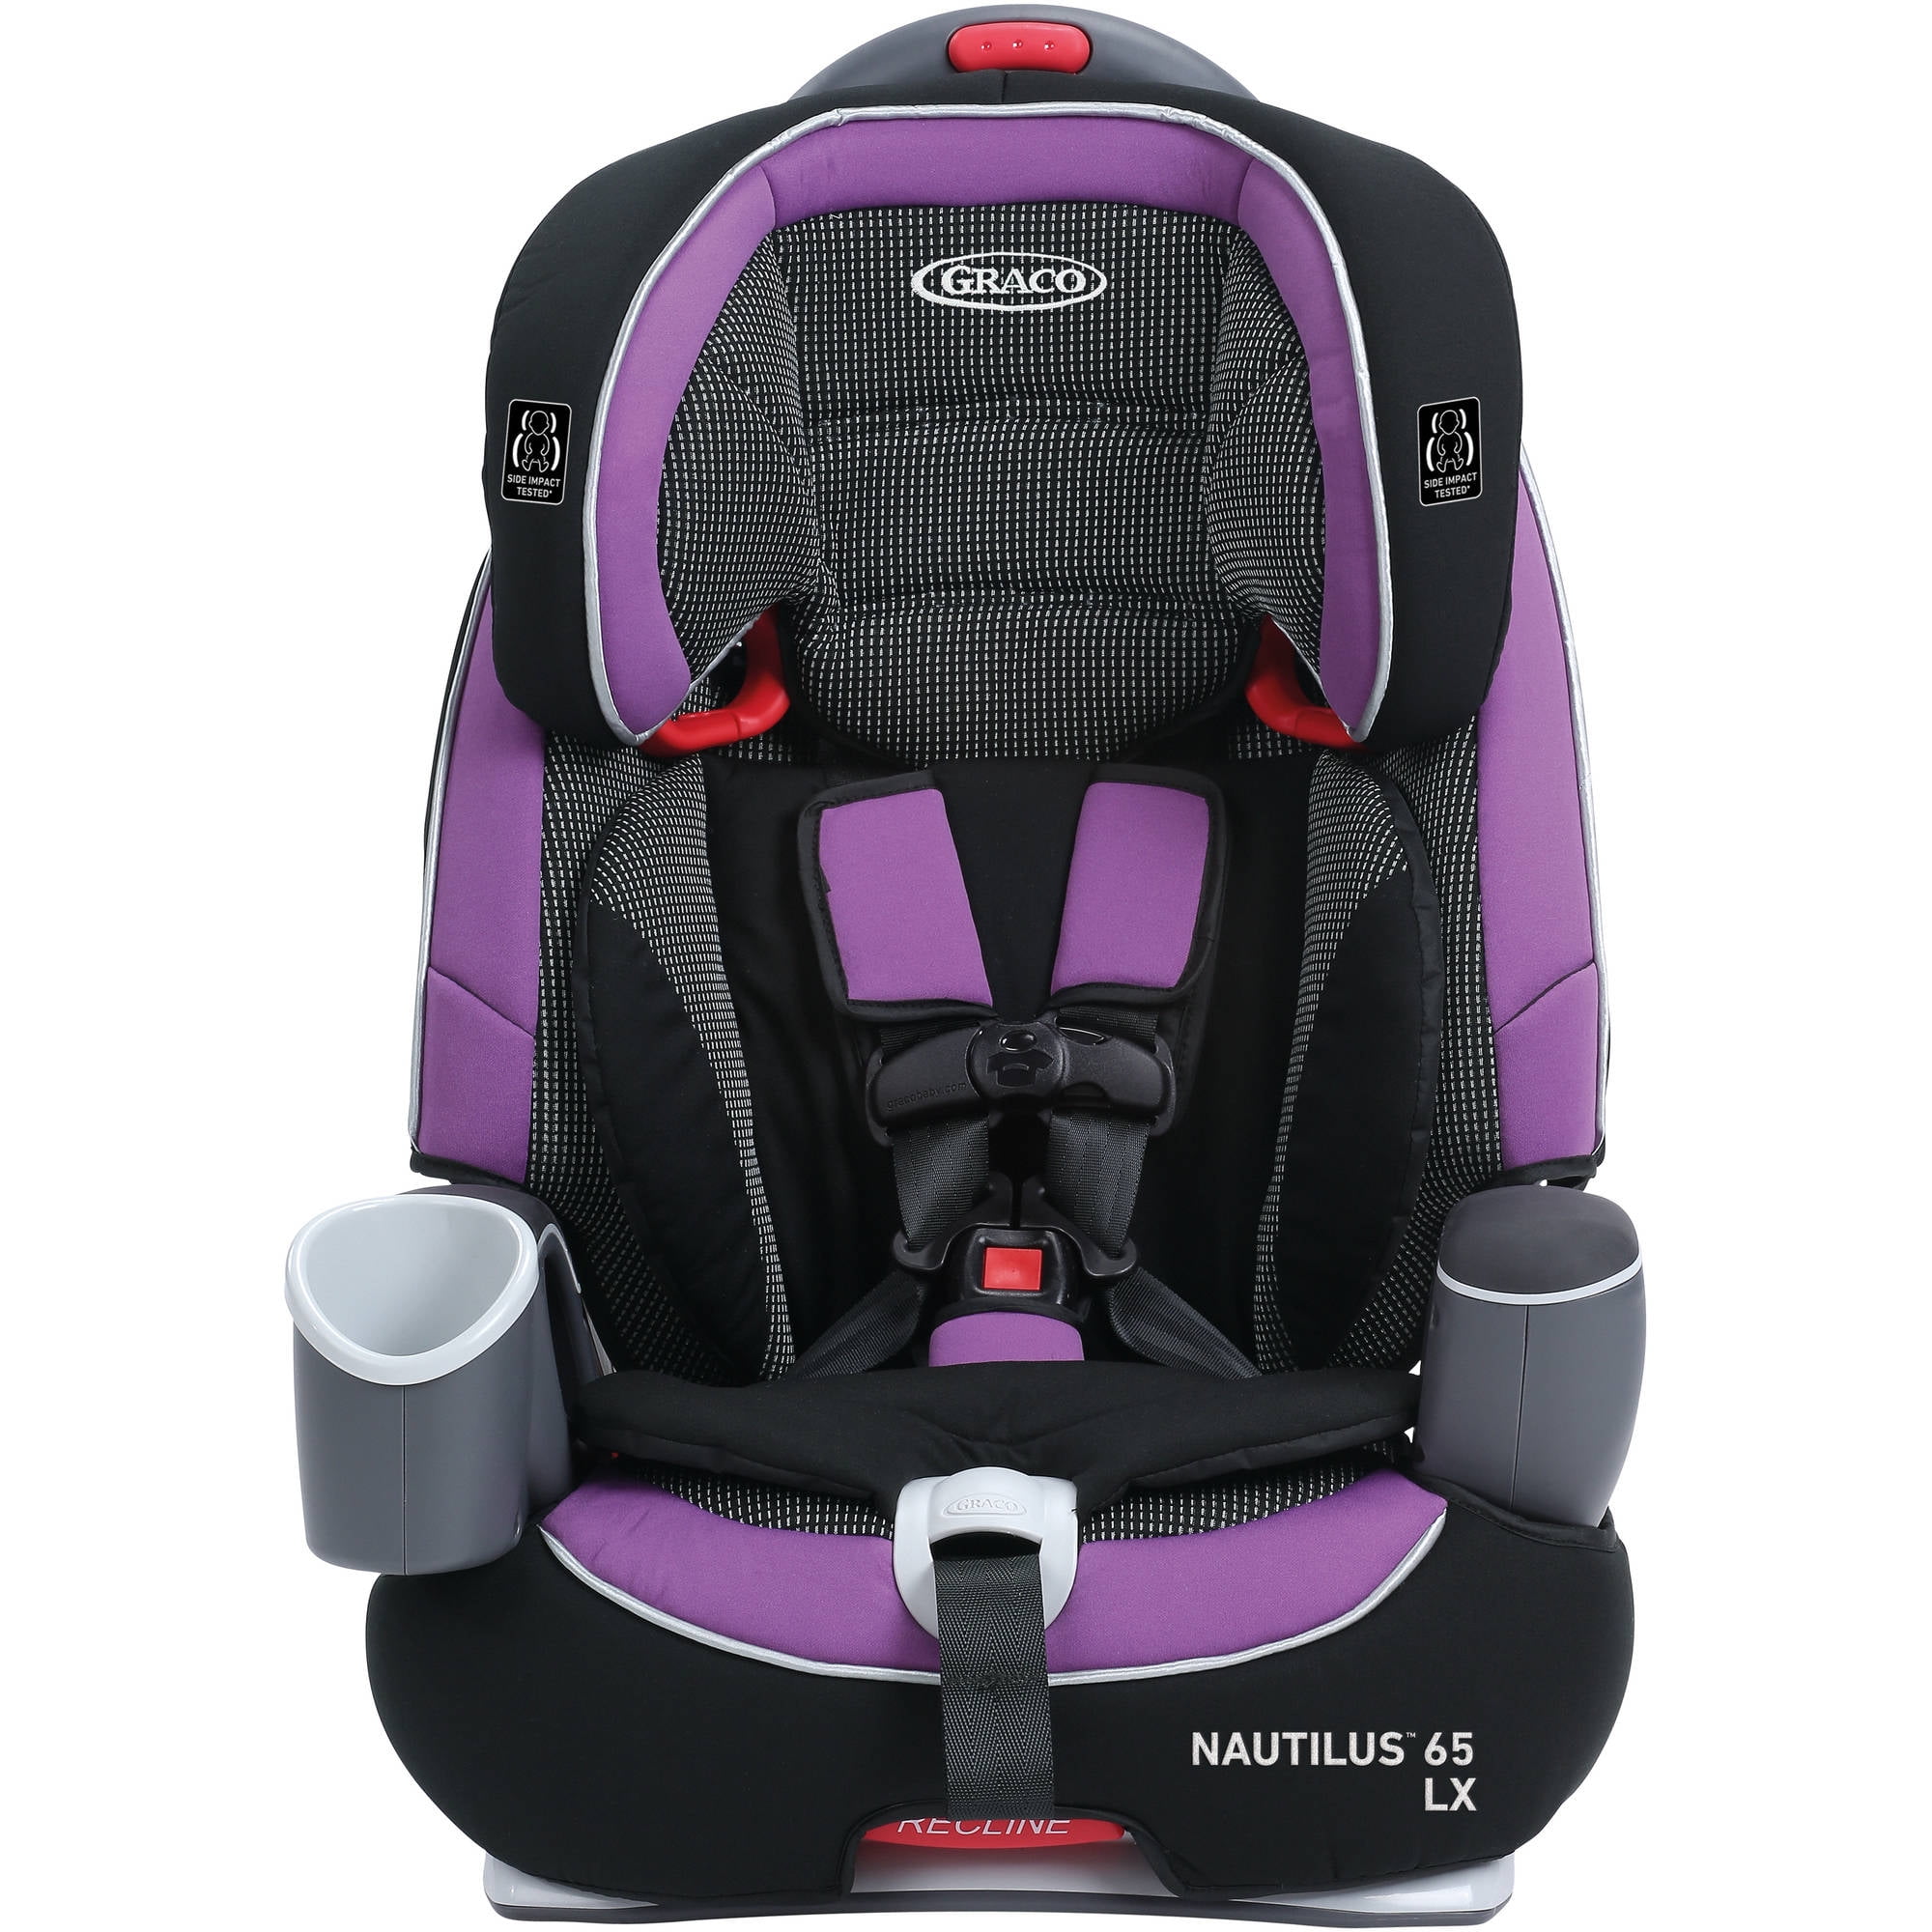 graco purple car seat